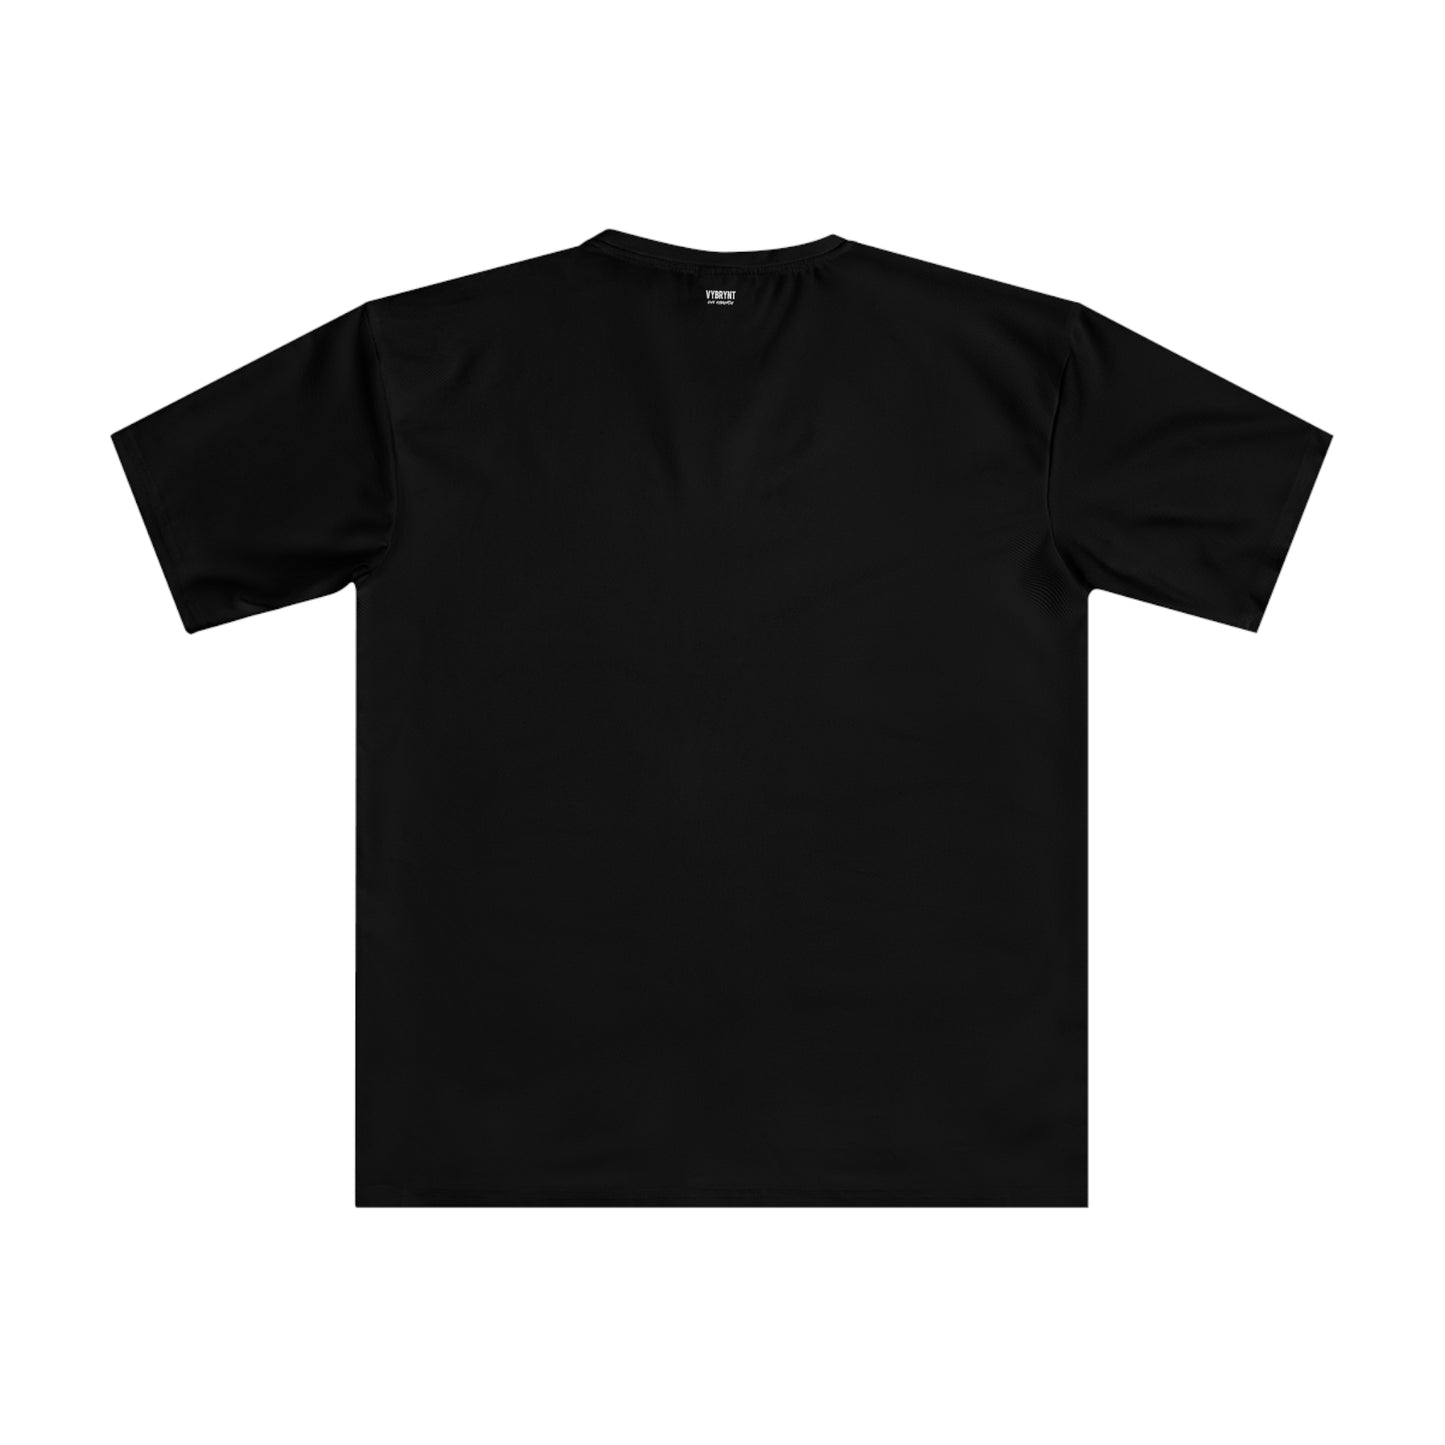 Compass City Men's Black T-shirt